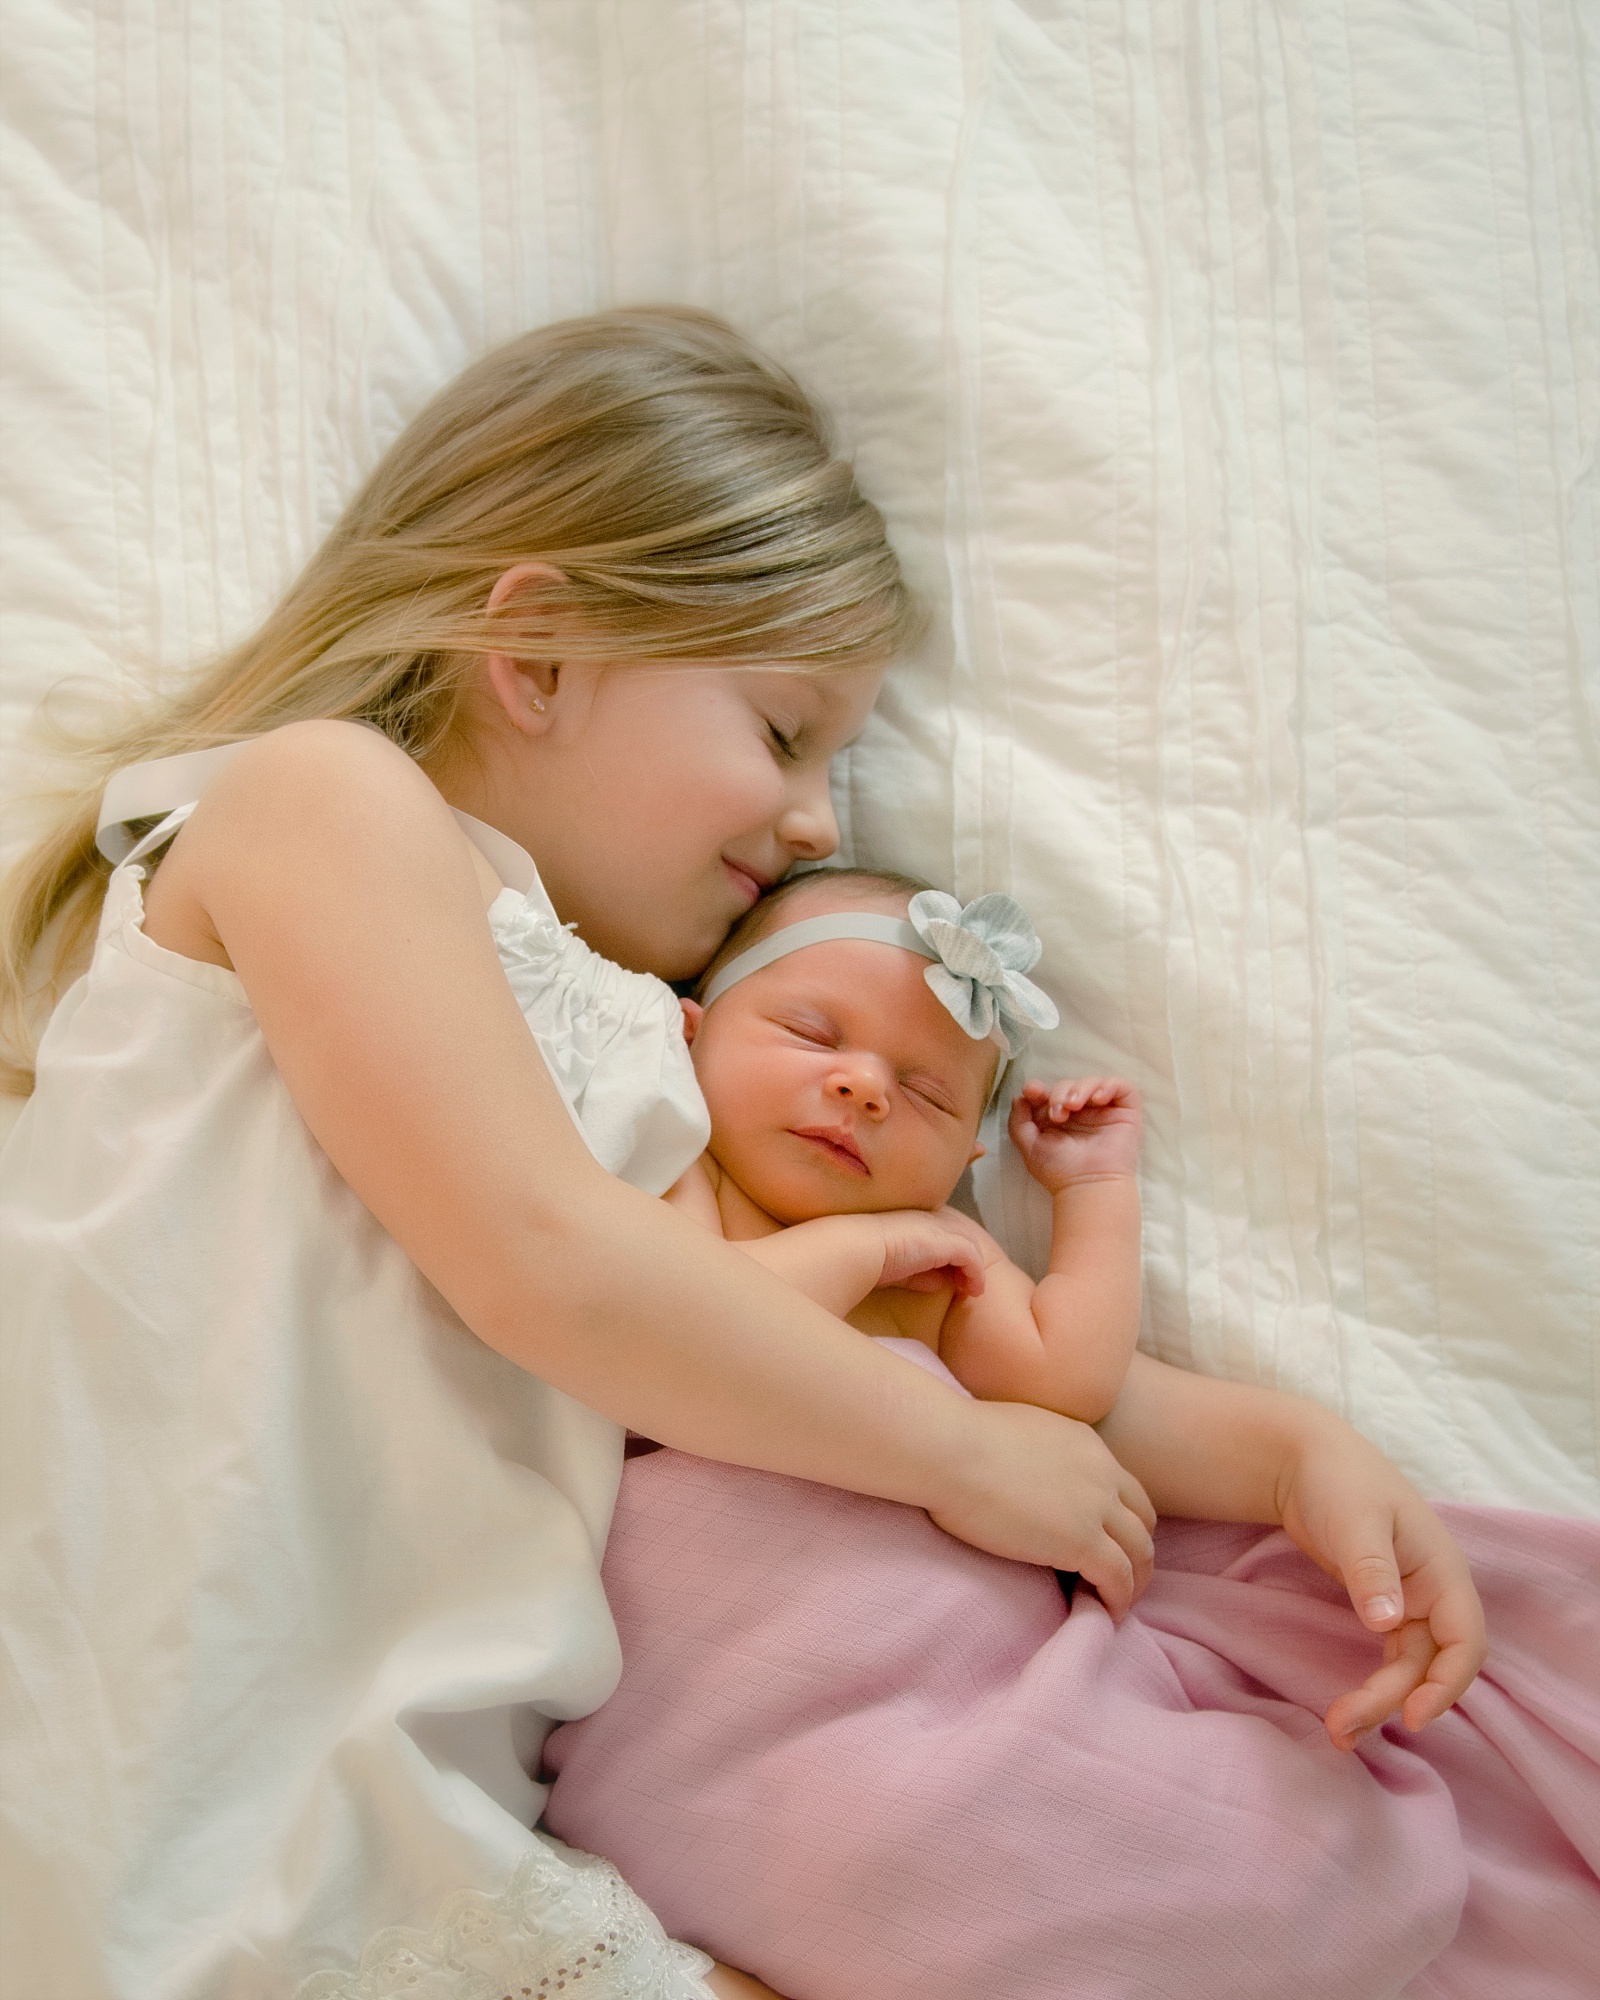 Big Sister snuggling newborn baby sister in pink blanket